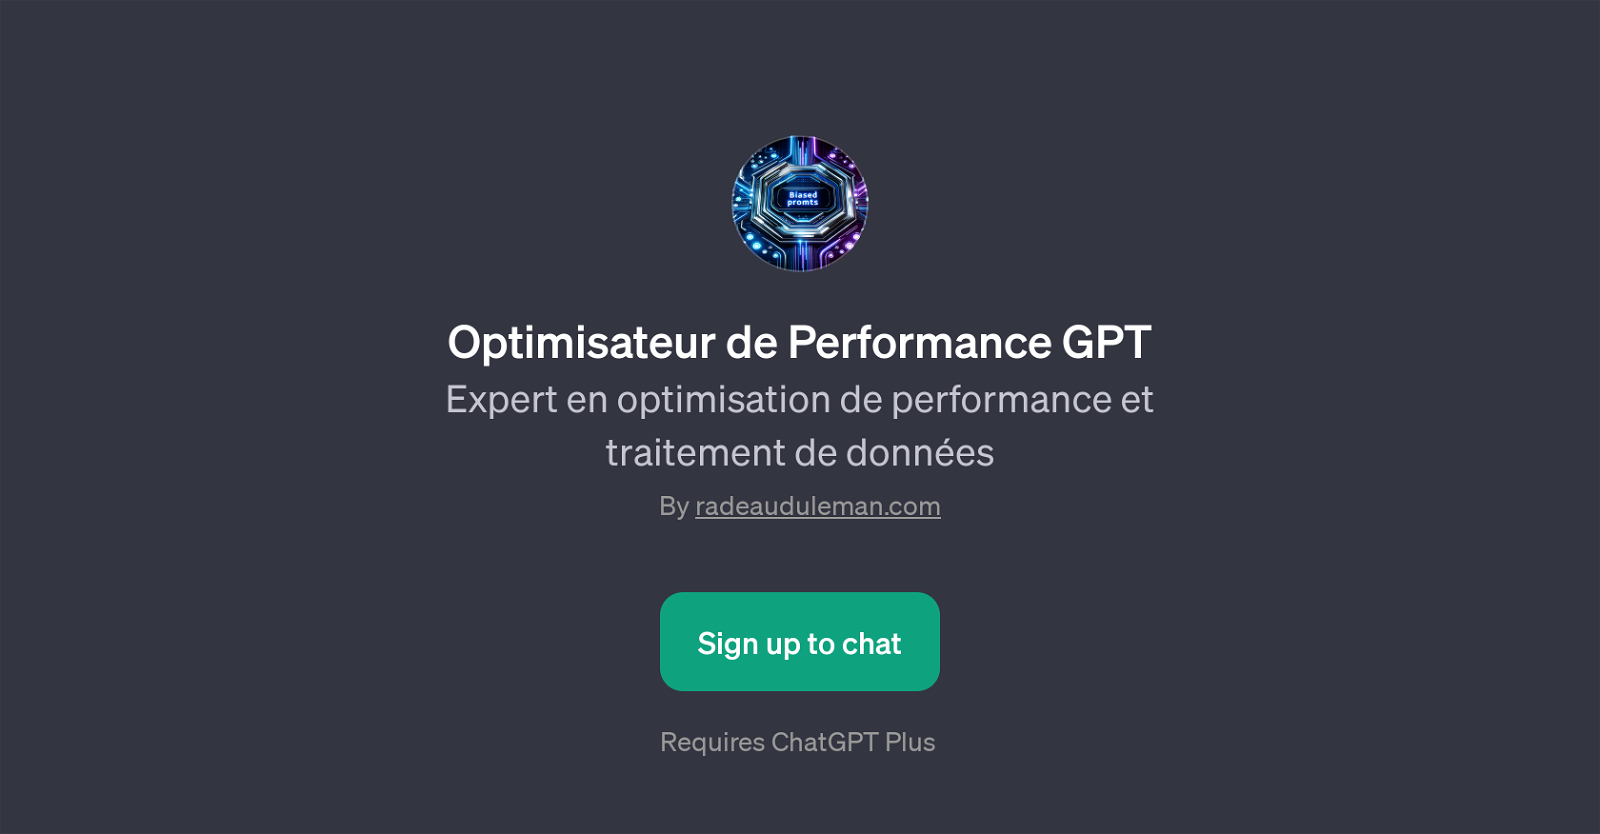 Optimisateur de Performance GPT website